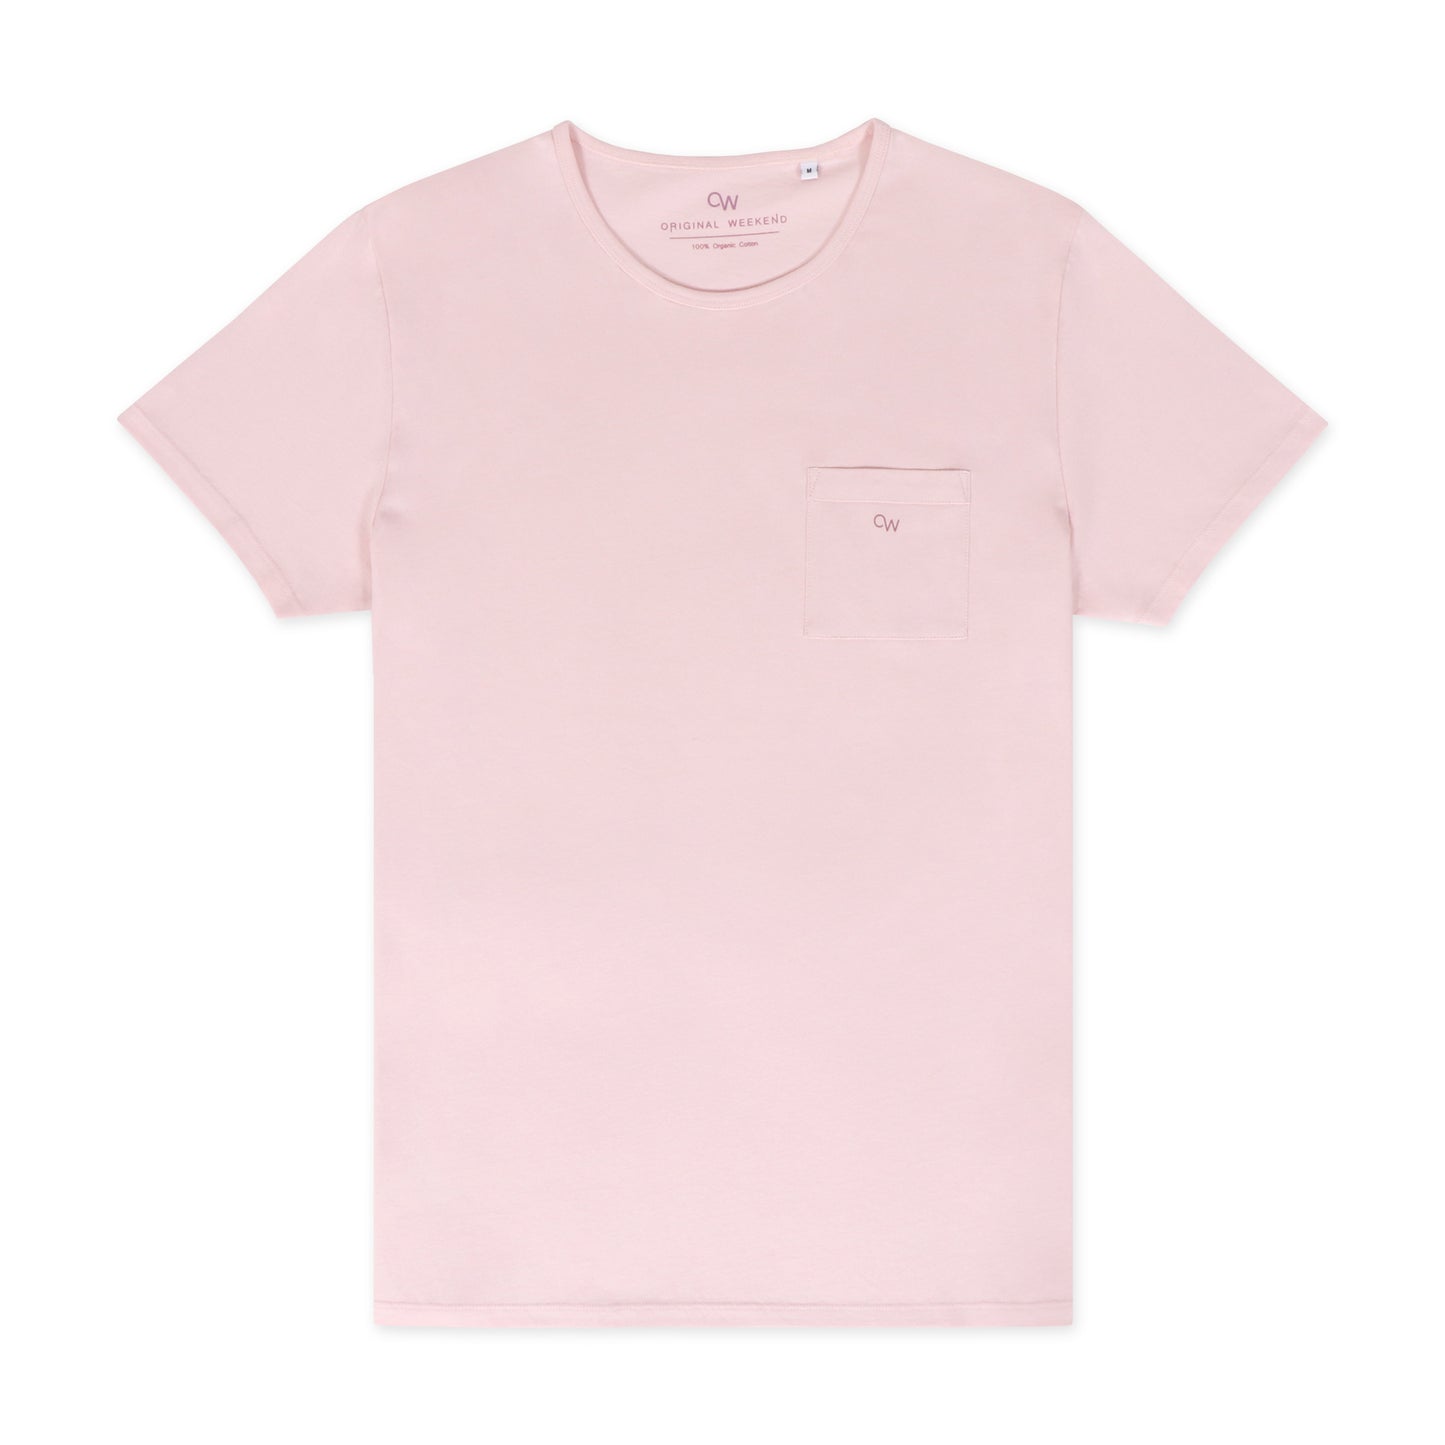 Original Weekend Organic Cotton Men's Pocket T-Shirt in Dawn Pink Flat Lay